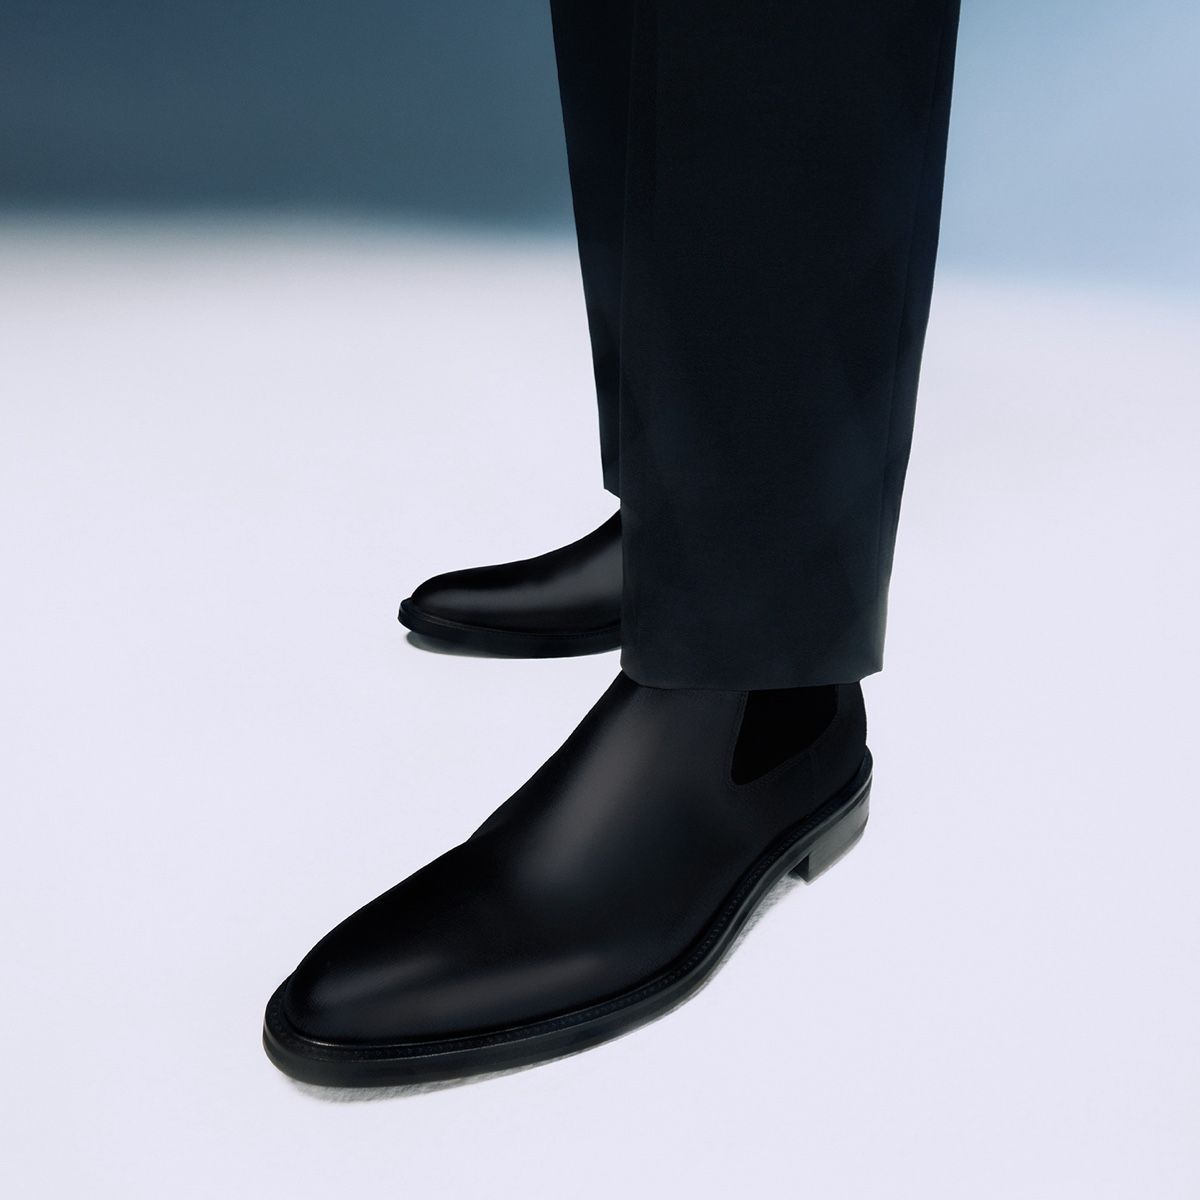 Bruun Black Men's Dress boots | ALDO Canada